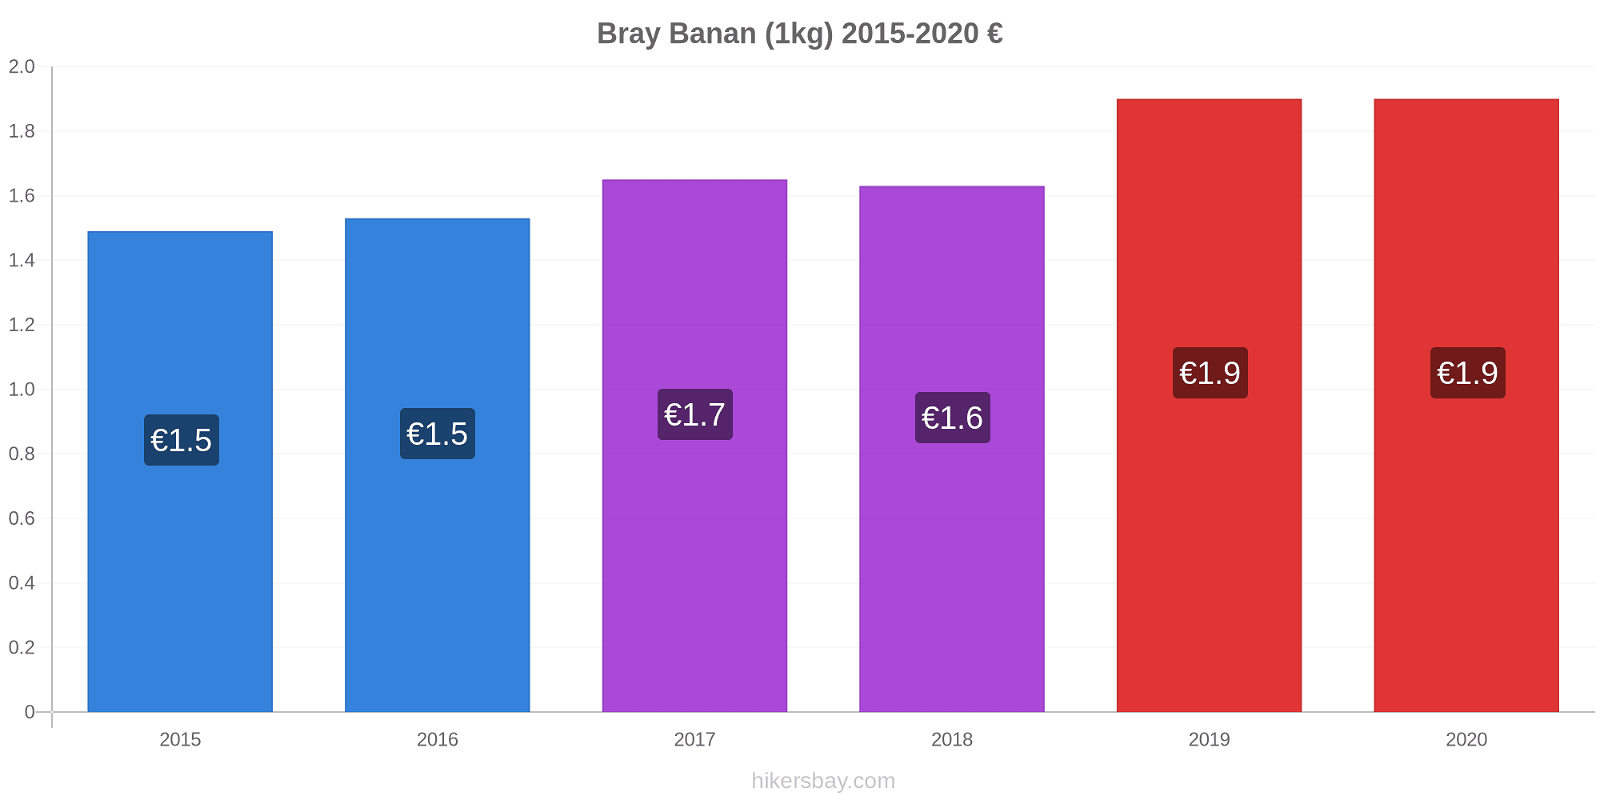 Bray prisendringer Banan (1kg) hikersbay.com